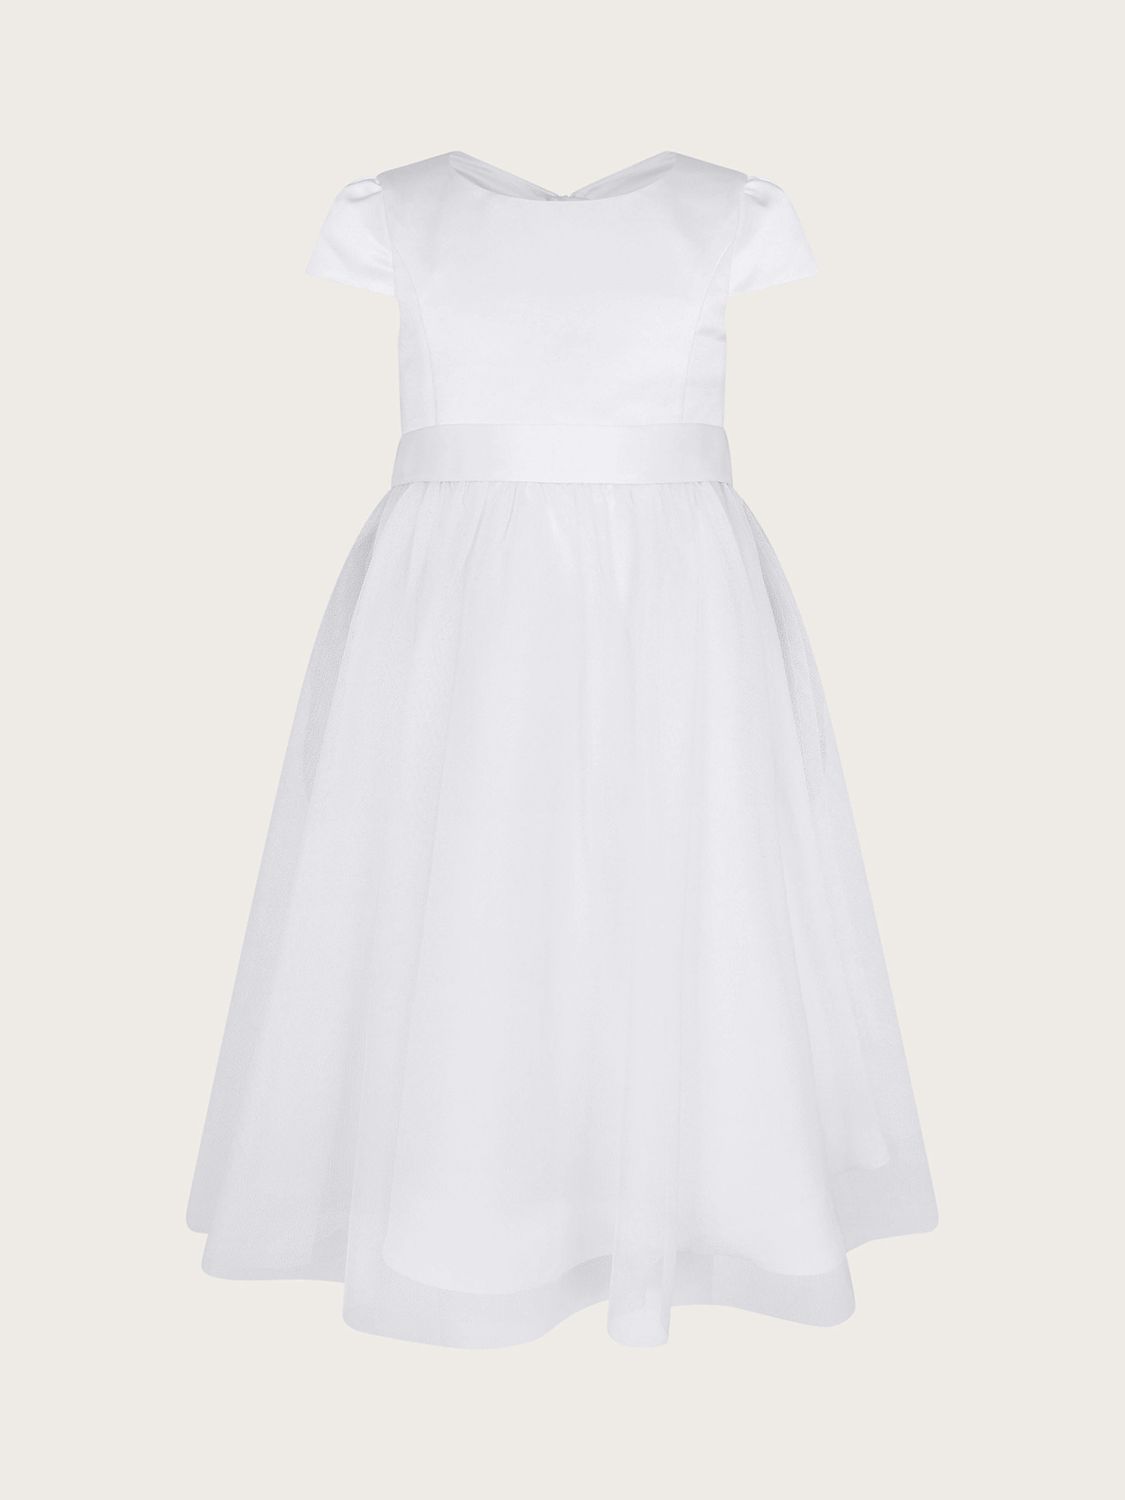 Monsoon Kids' Tulle Bridesmaid Dress, White, 3 years